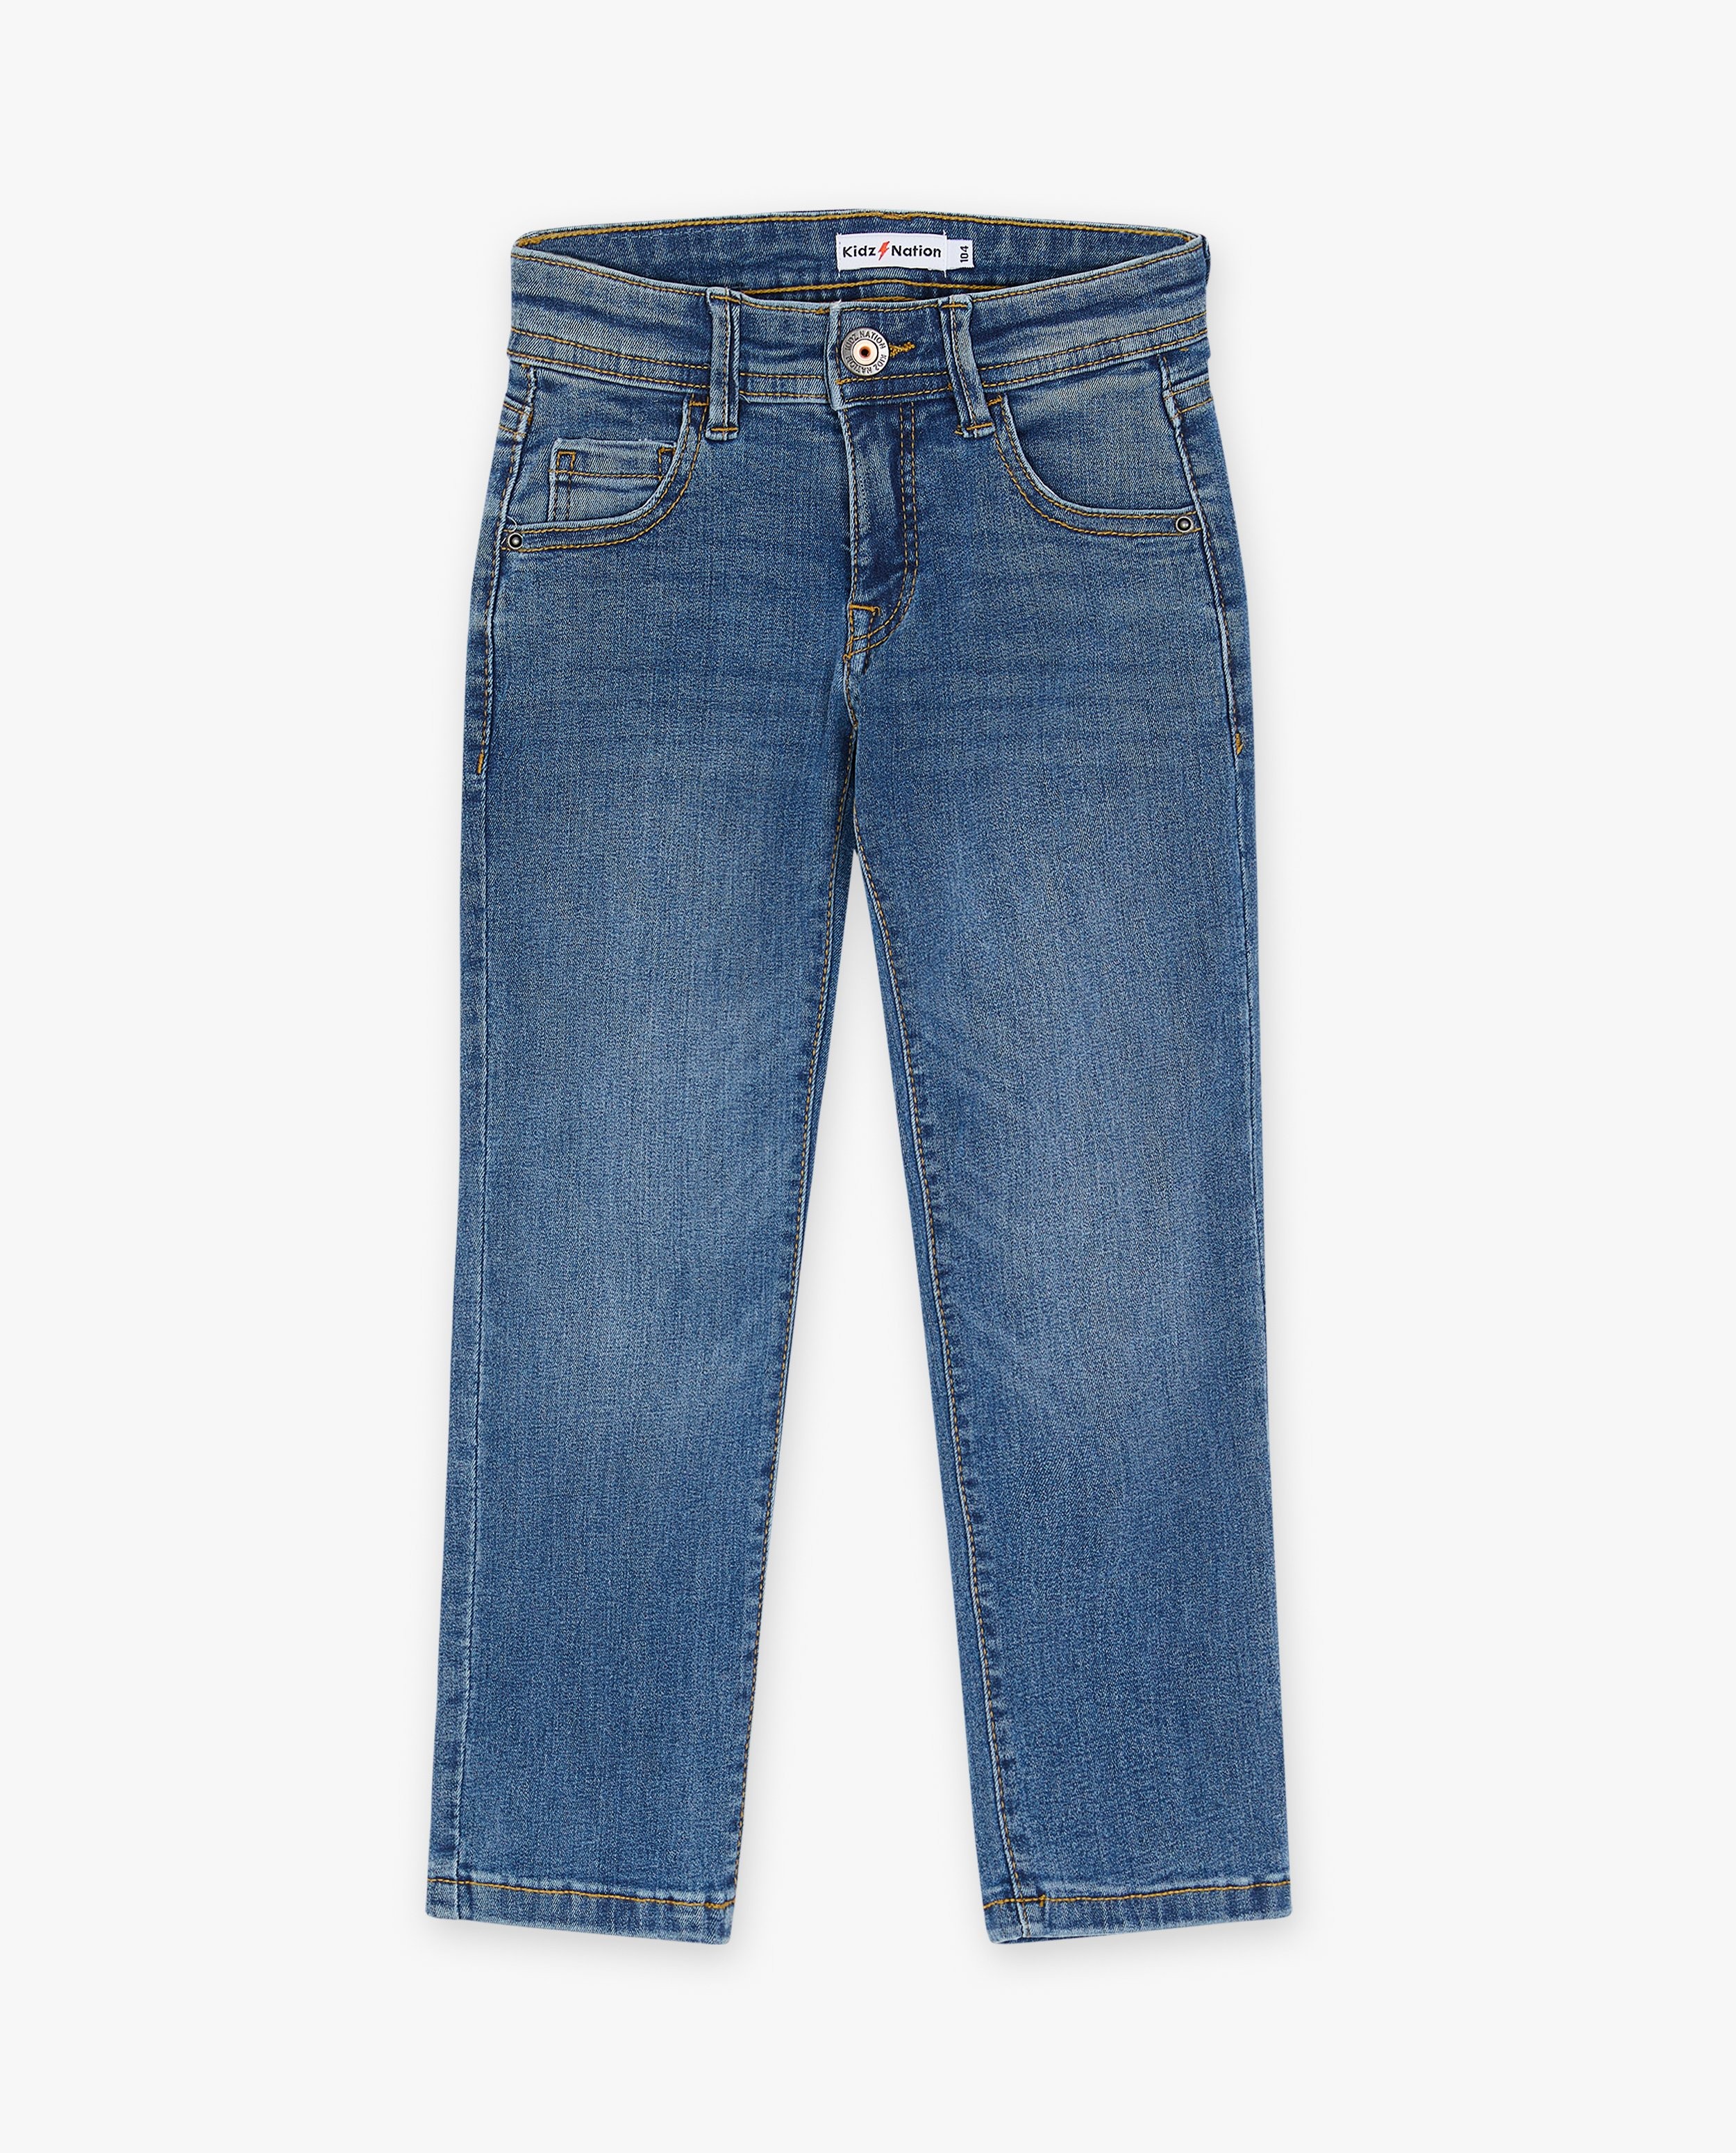 Jeans - Jeans bleu foncé, coupe skinny